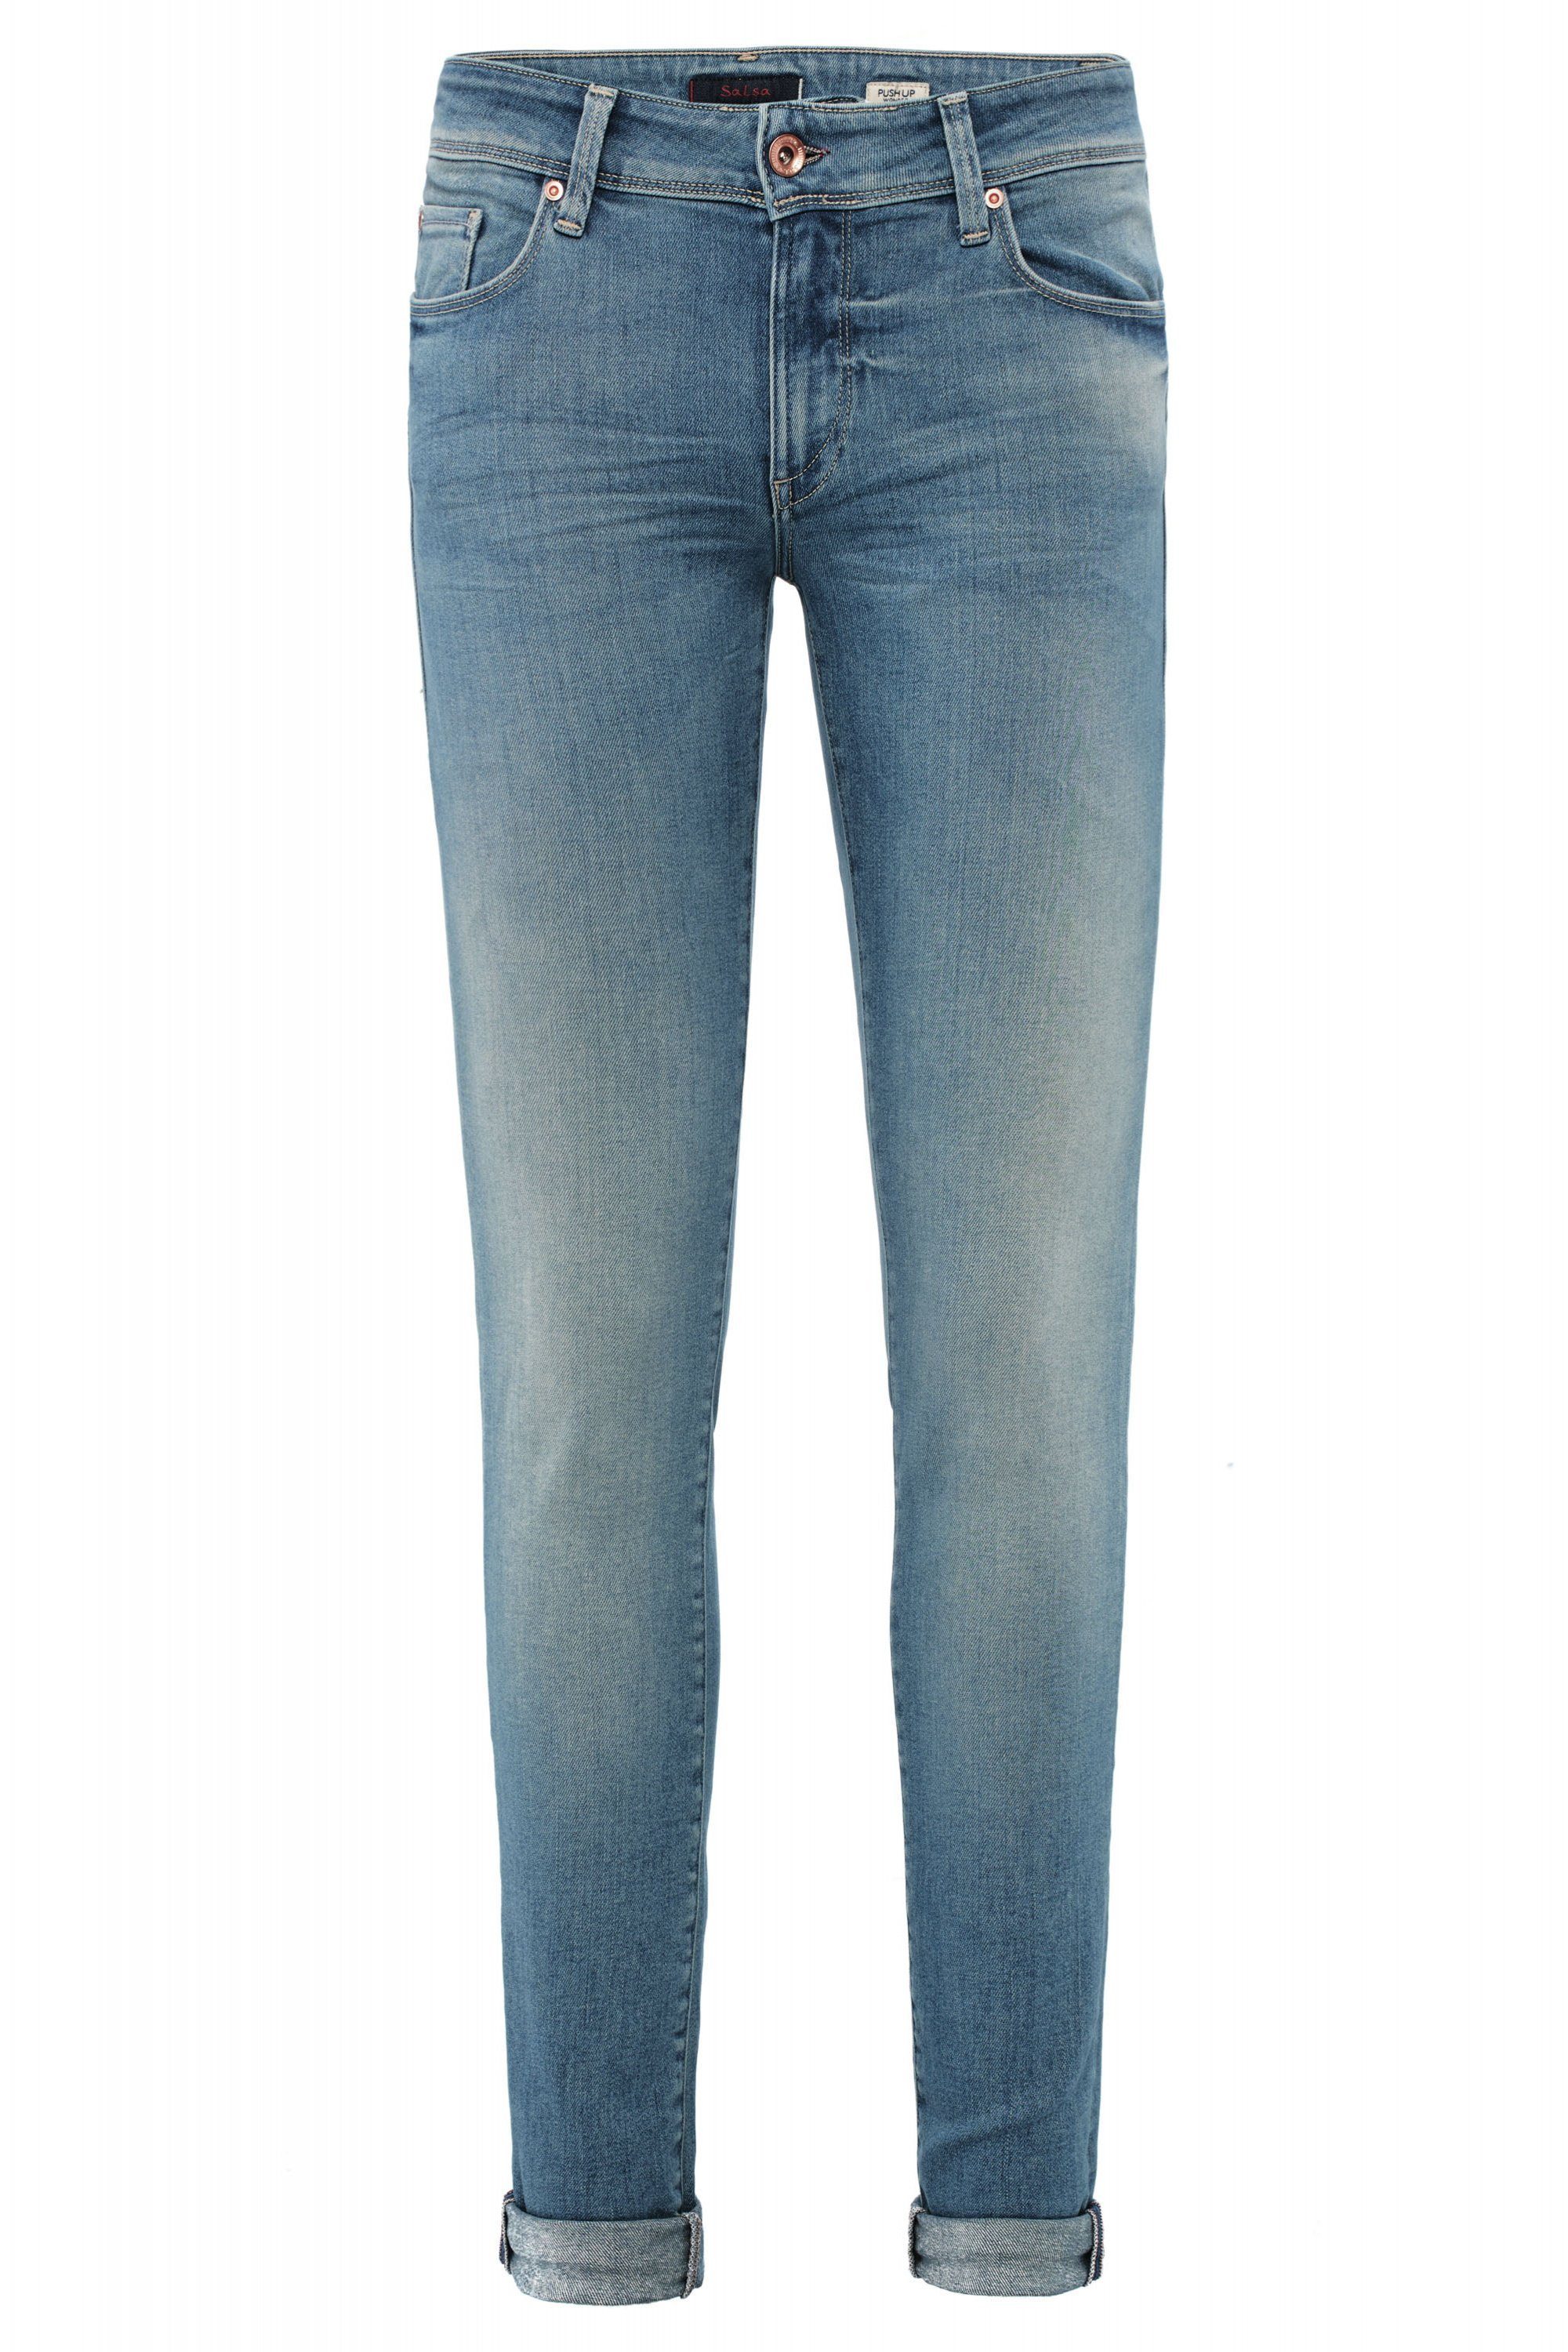 JEANS SALSA vintage Stretch-Jeans SKINNY Salsa blue 123178.8502 used UP WONDER PUSH